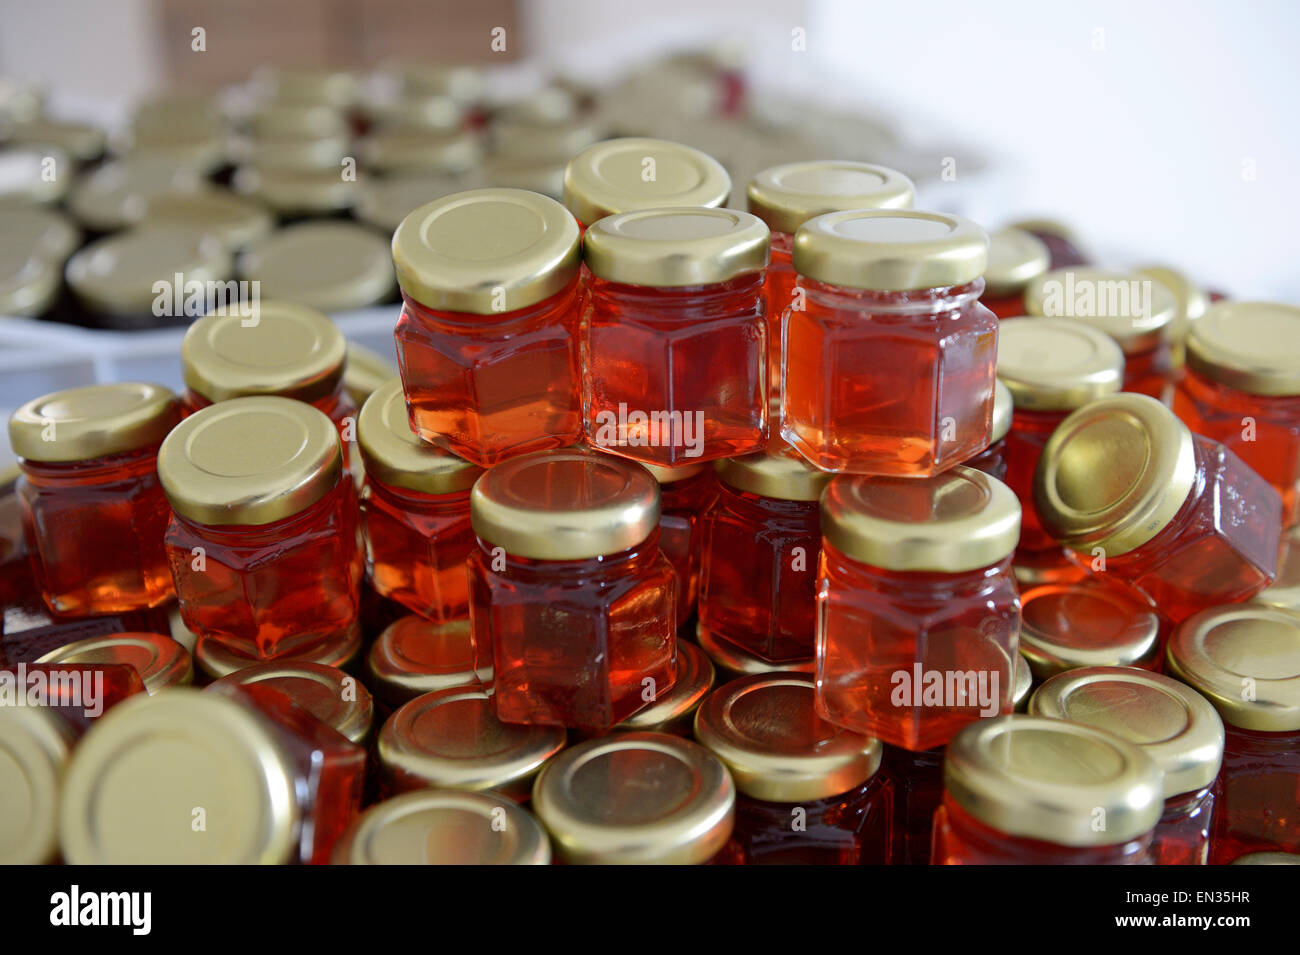 Jam made of Umbú fruits in jars, Caladinho, Uaua, Bahia, Brazil Stock Photo